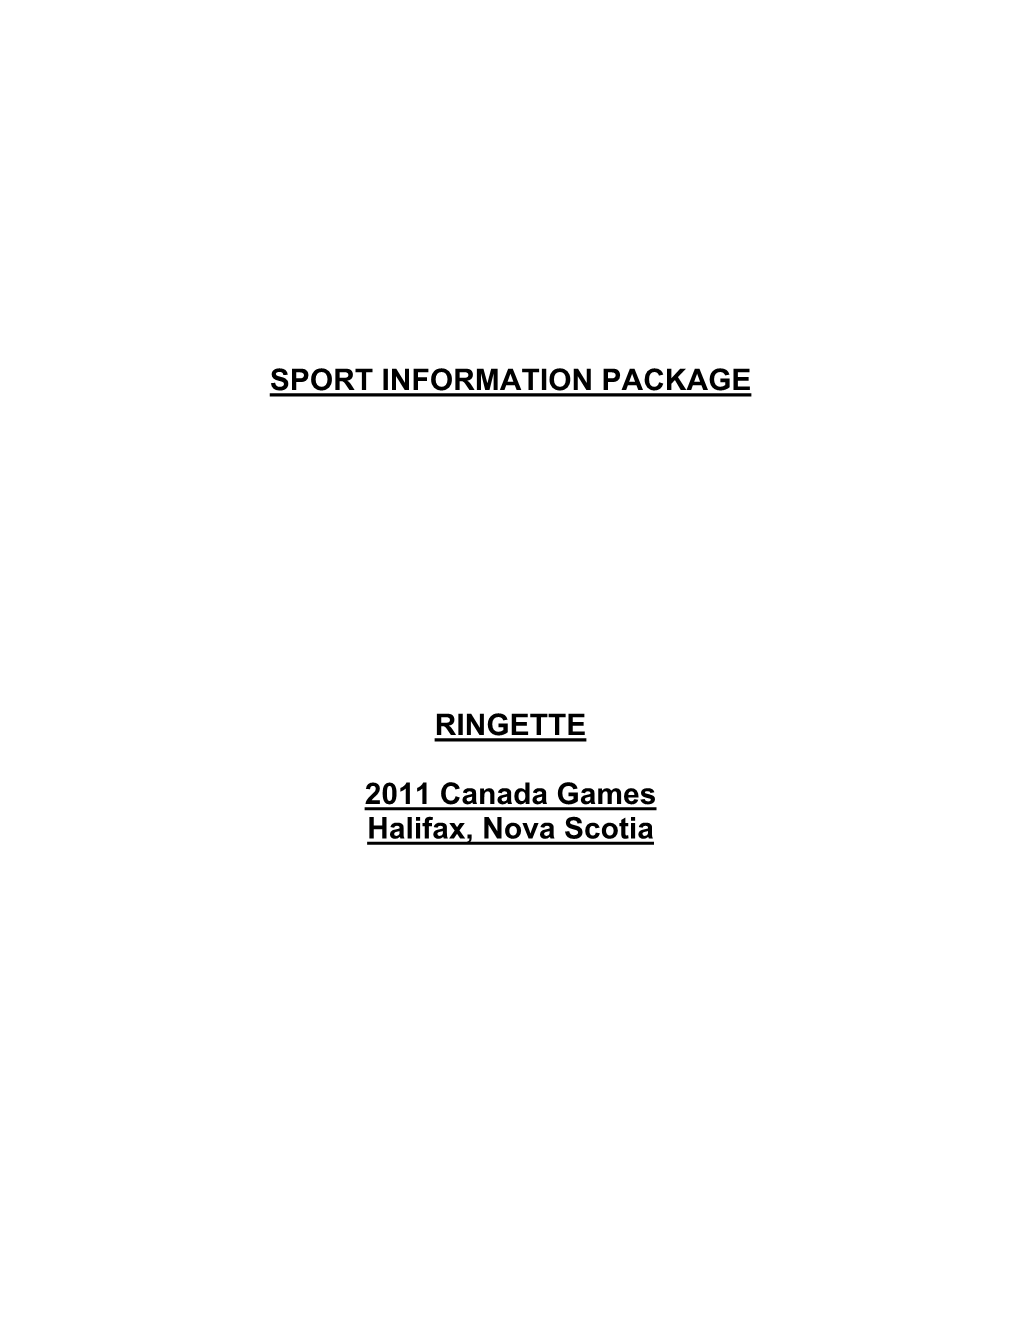 SPORT INFORMATION PACKAGE RINGETTE 2011 Canada Games